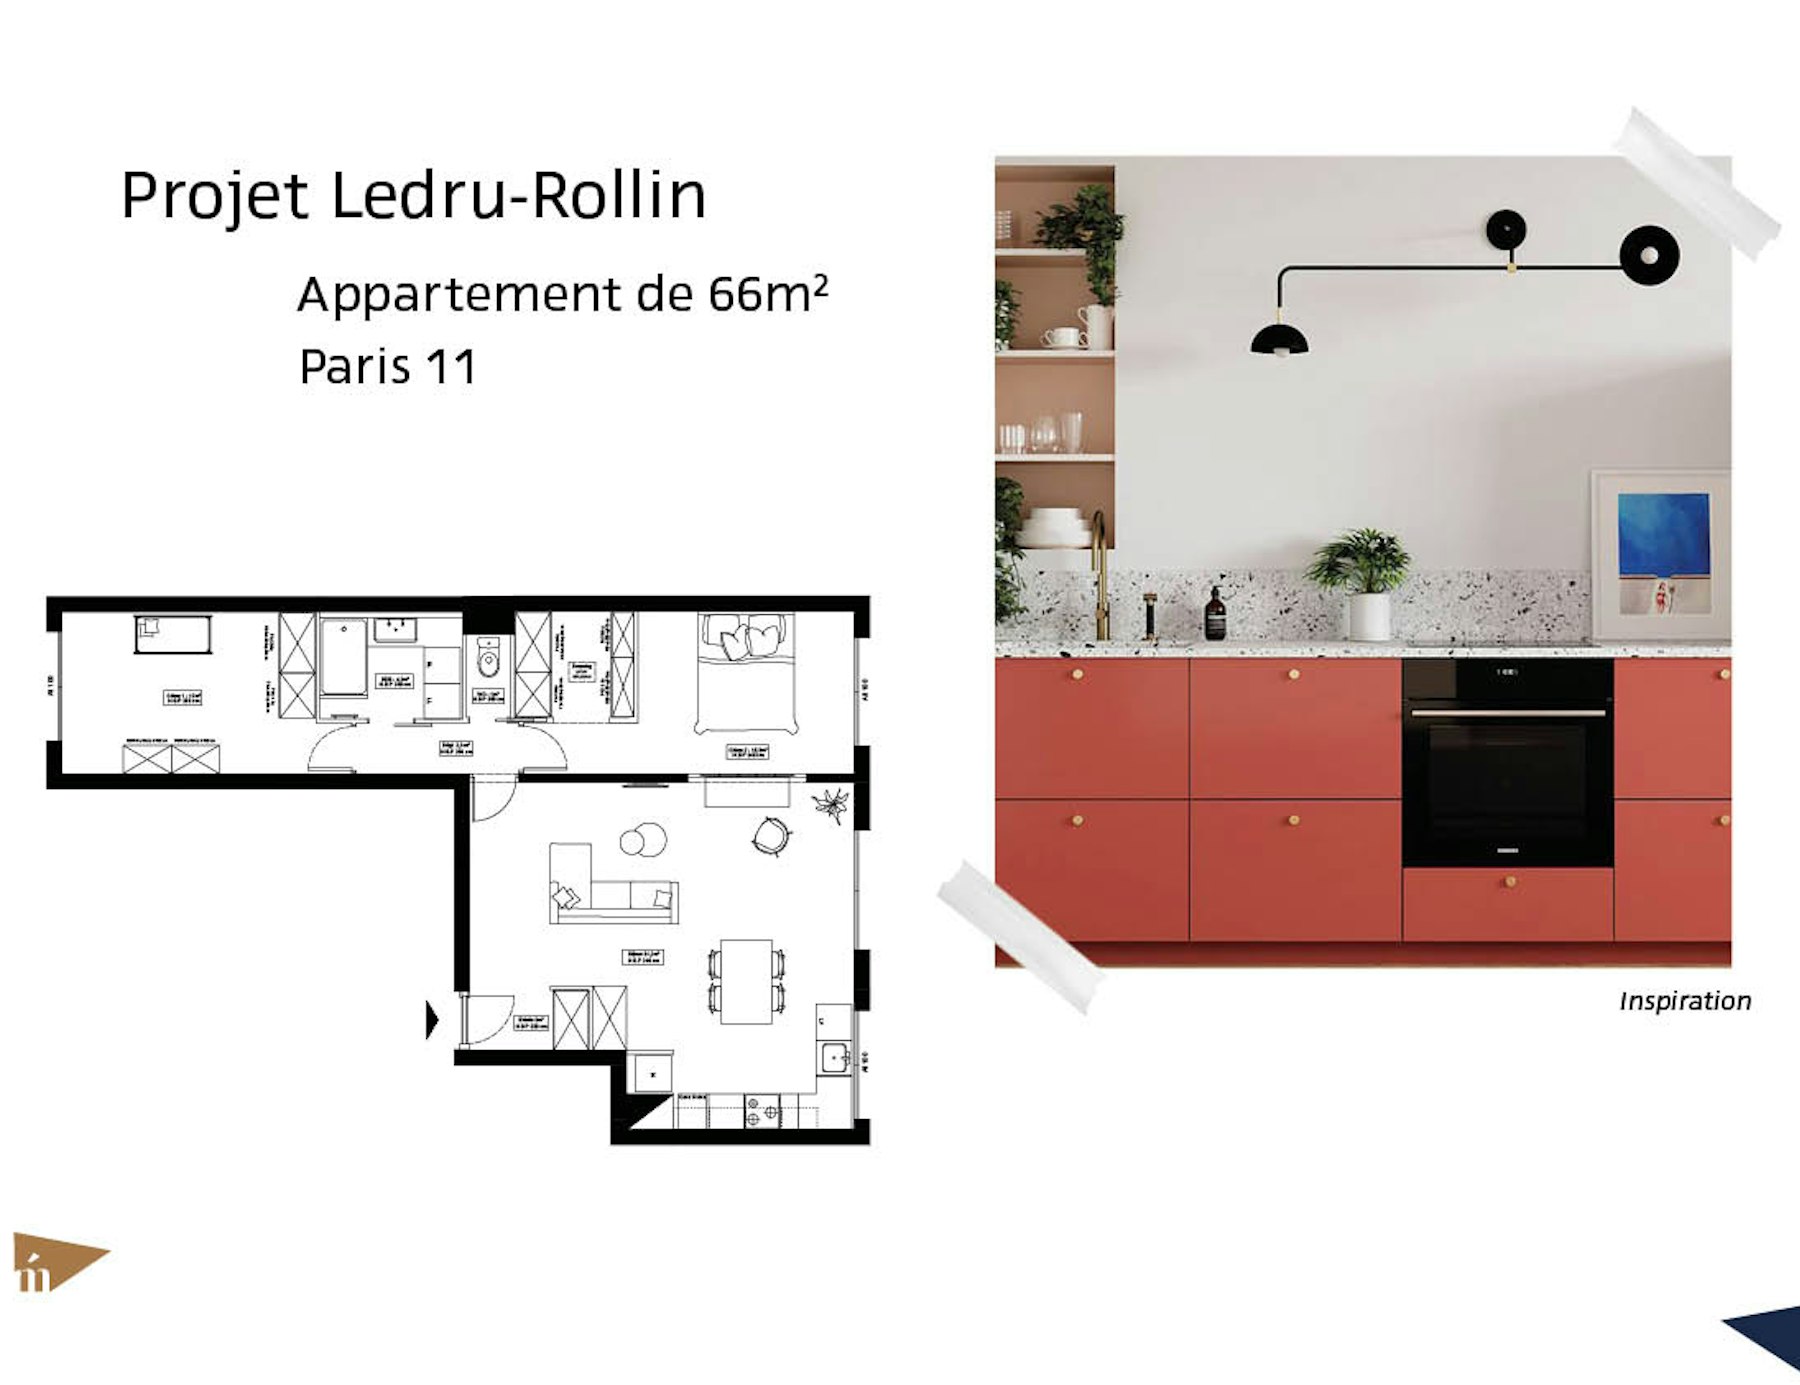 photo Projet Ledru-Rollin - 66m² - Paris 11 Léa Mast - Architecte hemea